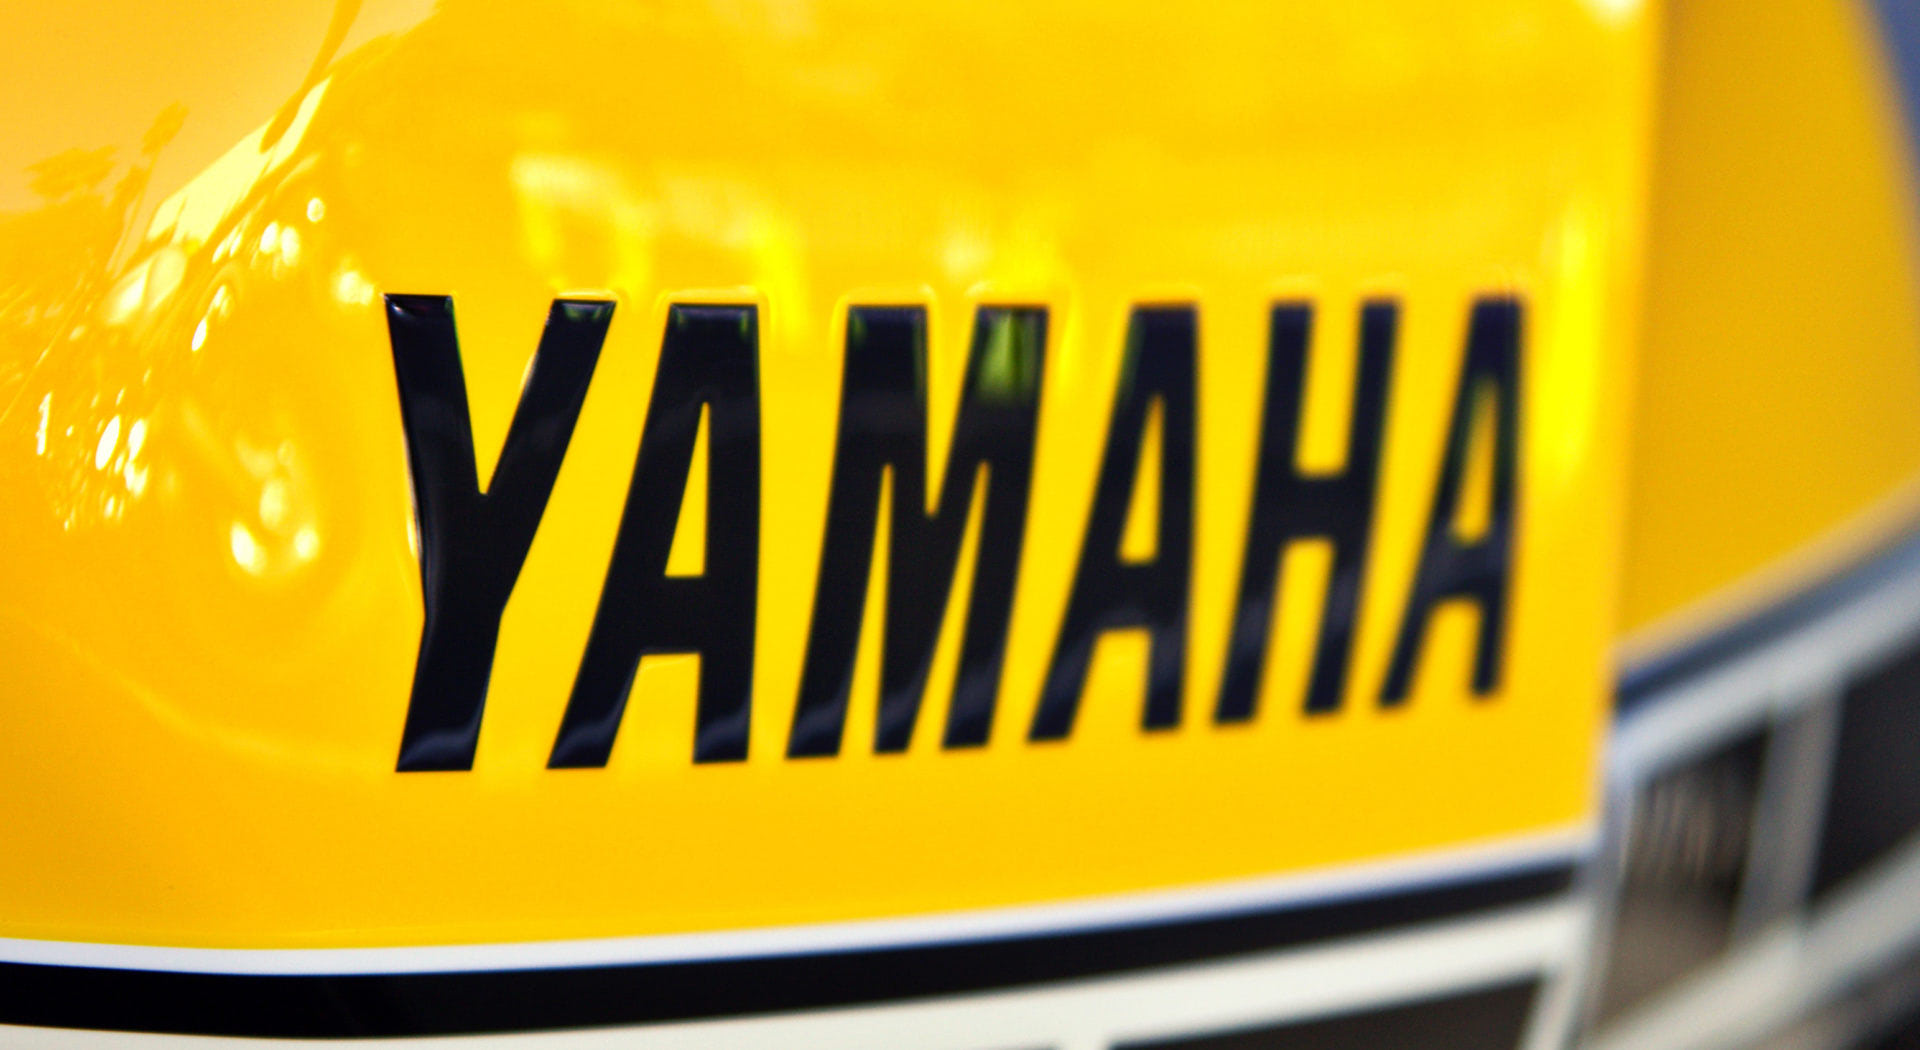 Yamaha motorcycle logo